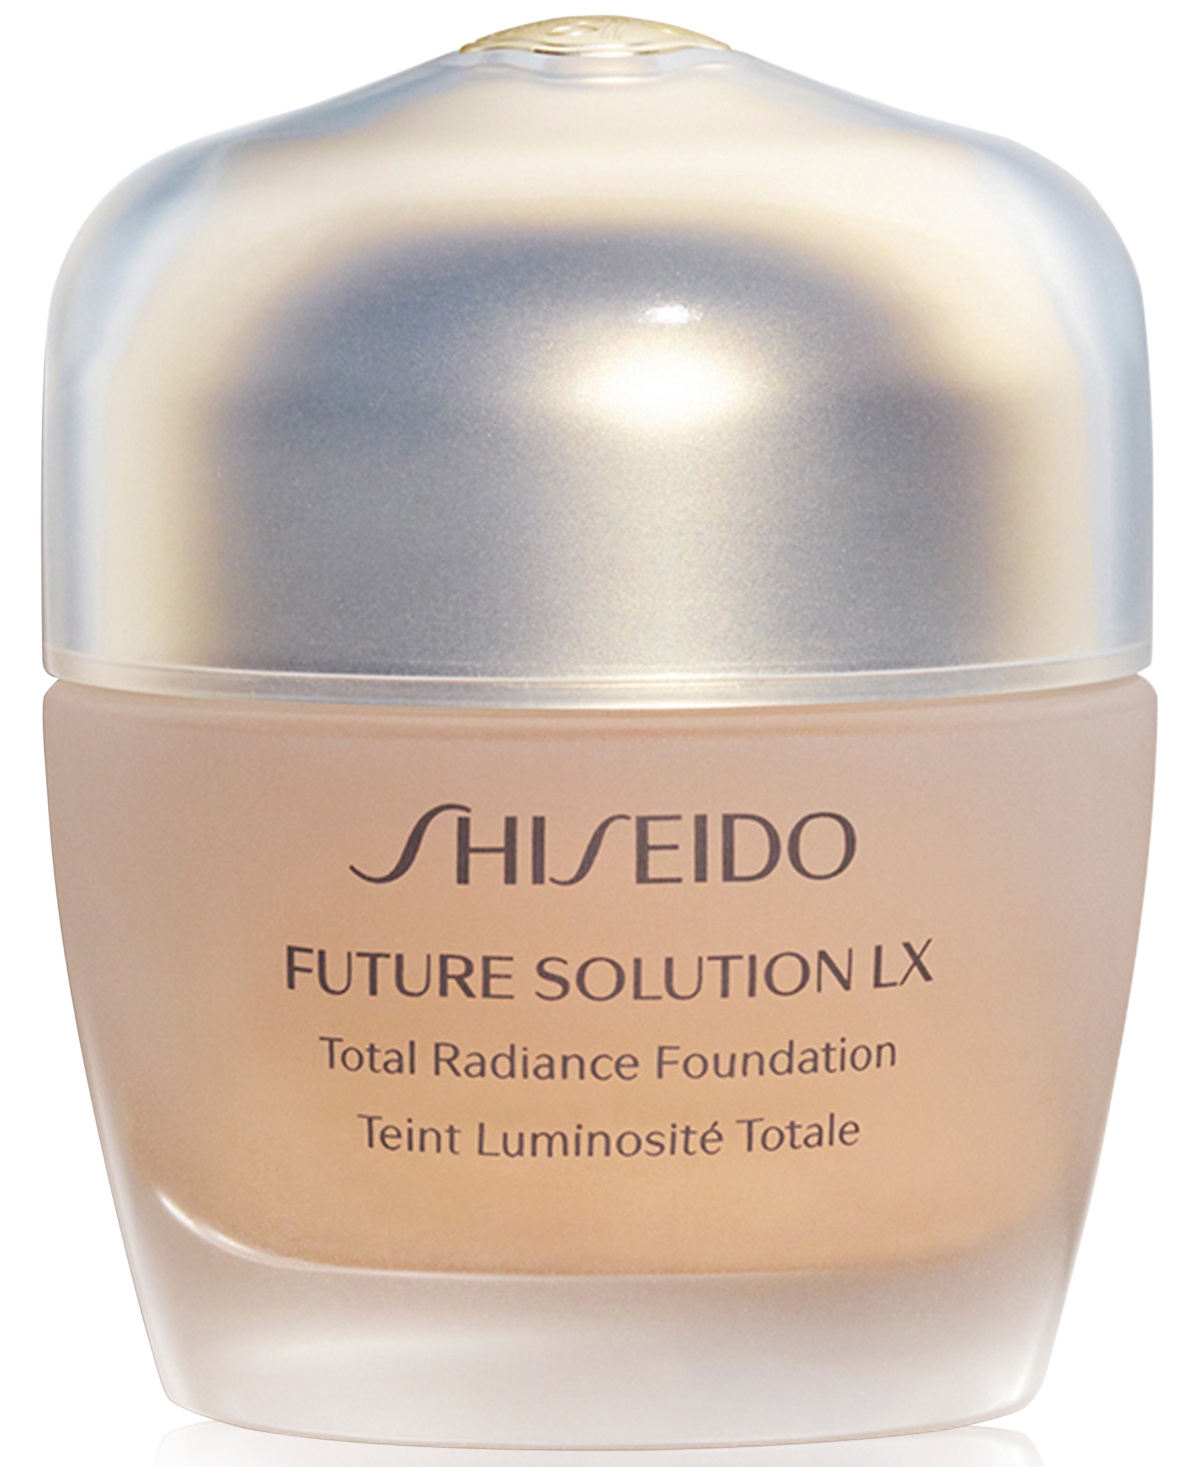 Shiseido Future Solution Lx Total Radiance Foundation Broad Spectrum Spf 20 Sunscreen, 1.2 oz